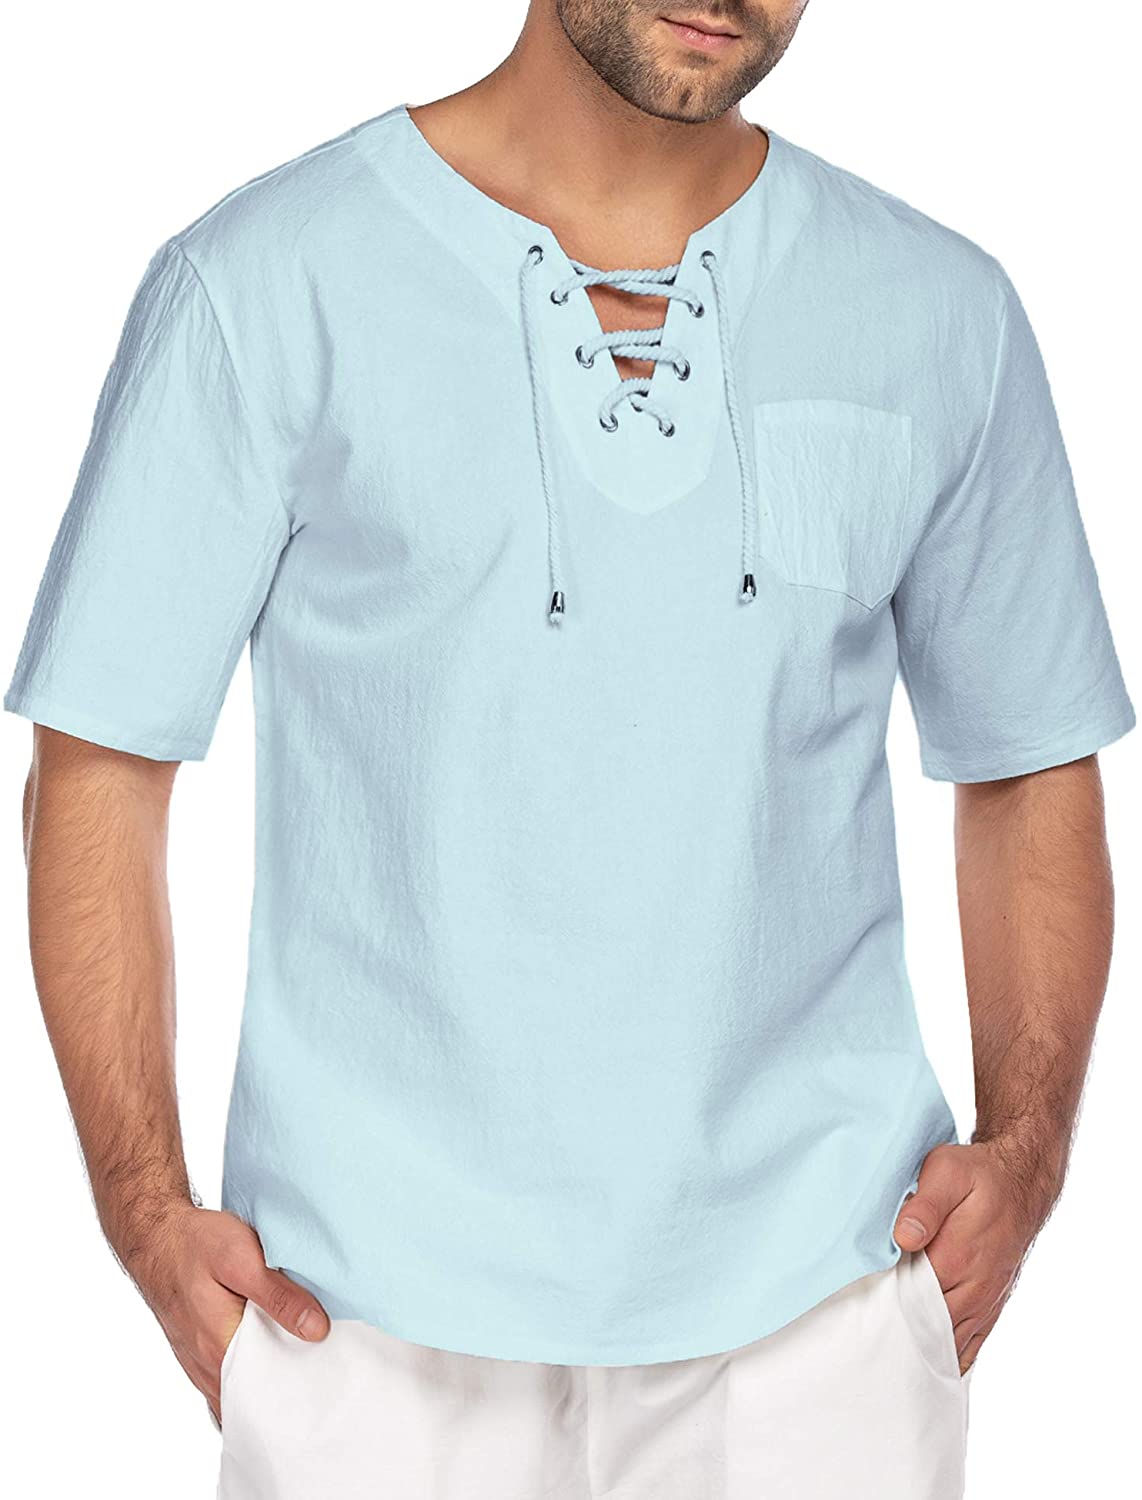 COOFANDY Mens Fashion T Shirt Cotton Linen Tee Hippie Shirts V-Neck Yoga Top 